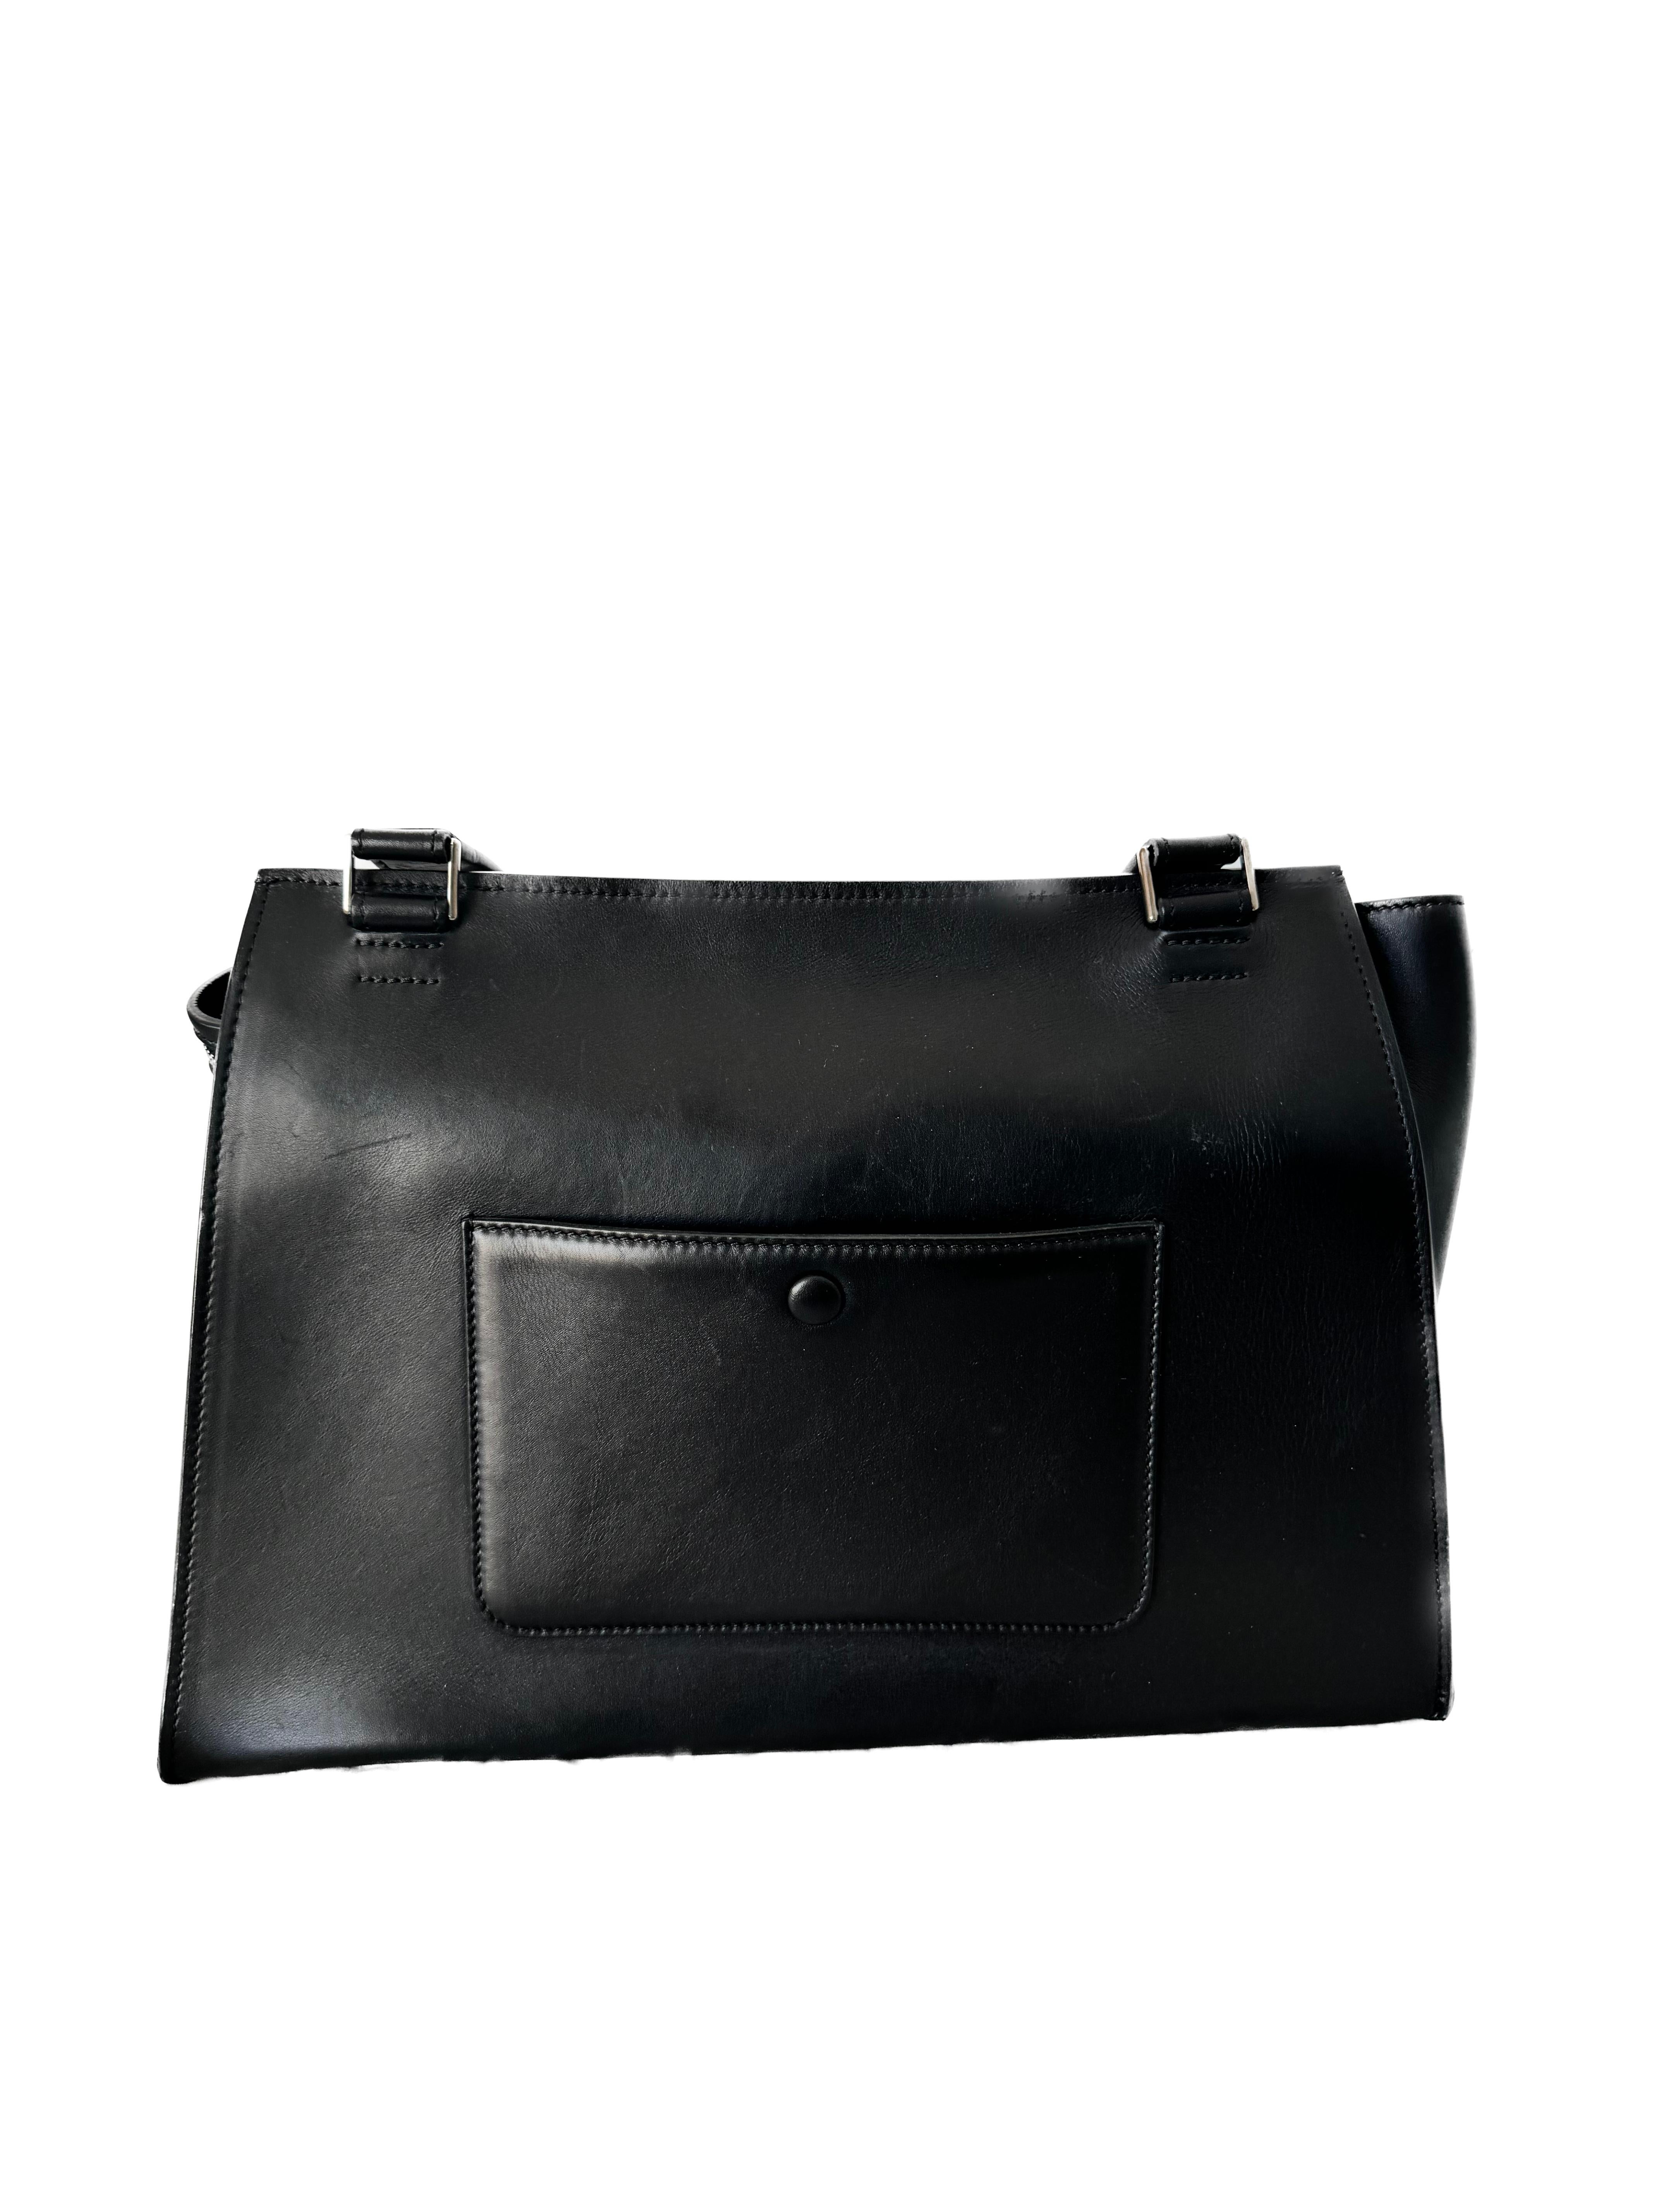 Celine Phoebe Philo 2 tone Medium Edge bag  In Good Condition For Sale In Toronto, CA